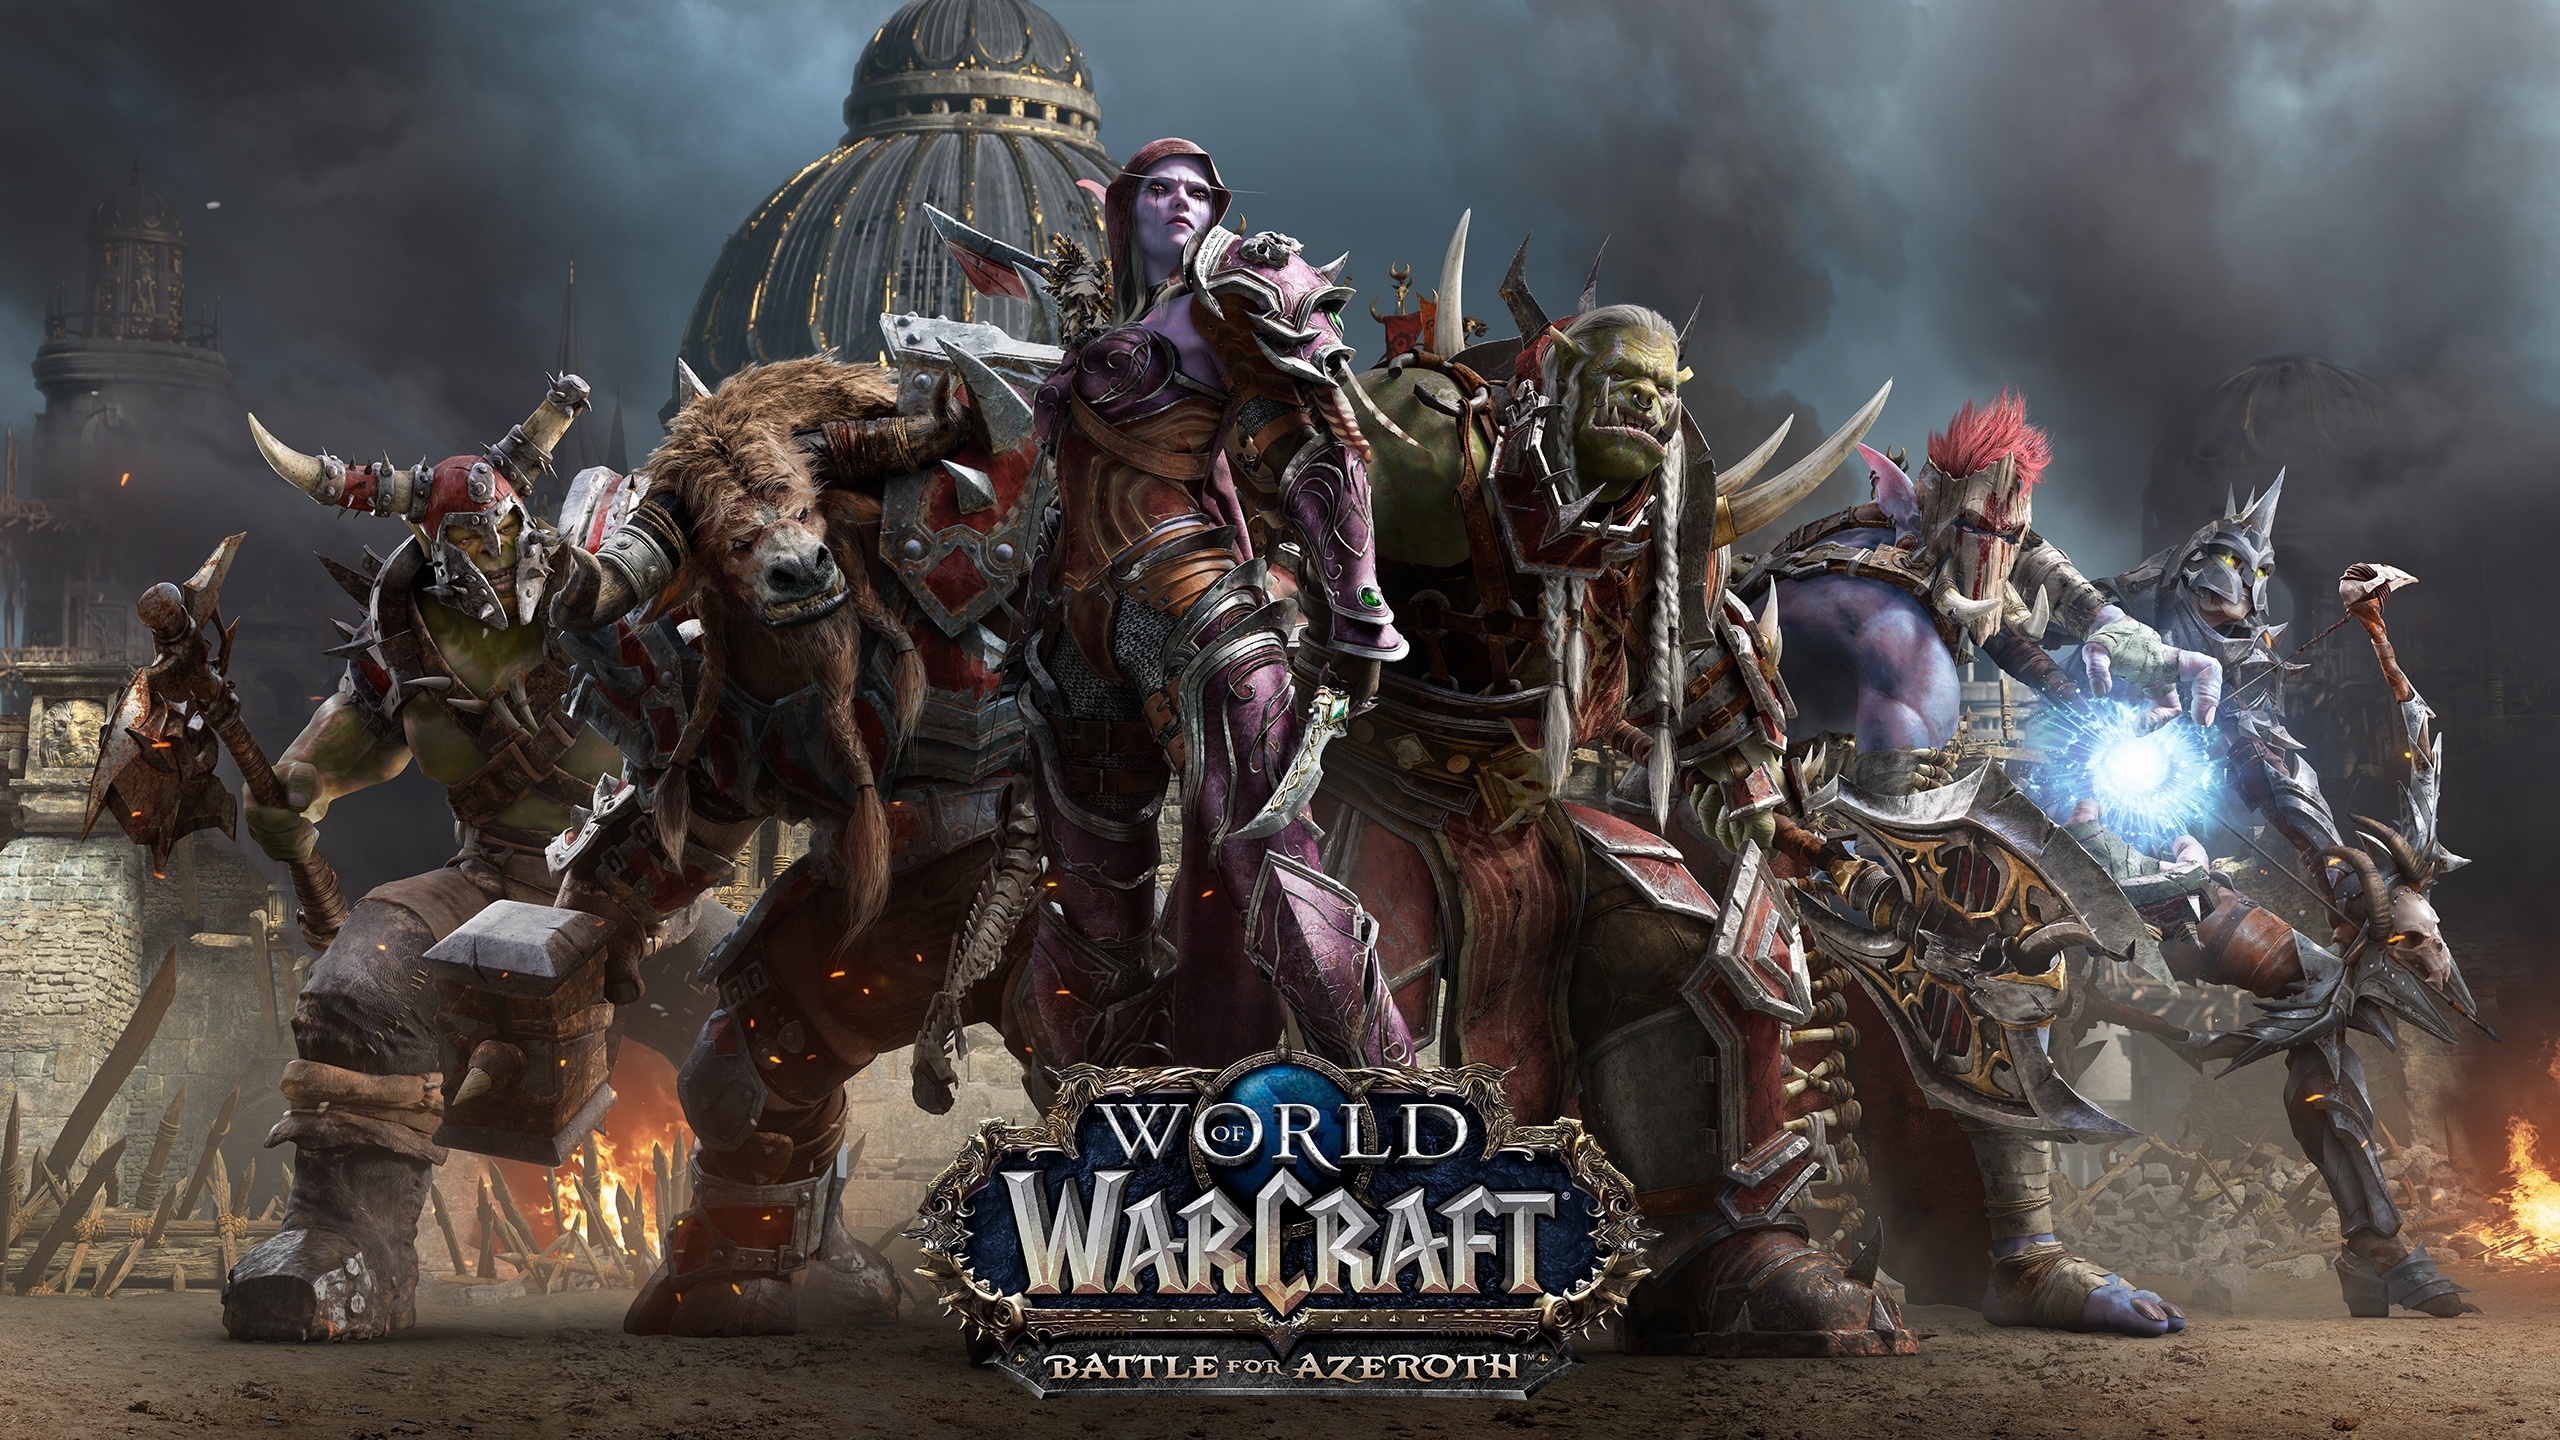 varok saurfang, video game, world of warcraft: battle for azeroth, horde (world of warcraft), sylvanas windrunner, world of warcraft 32K